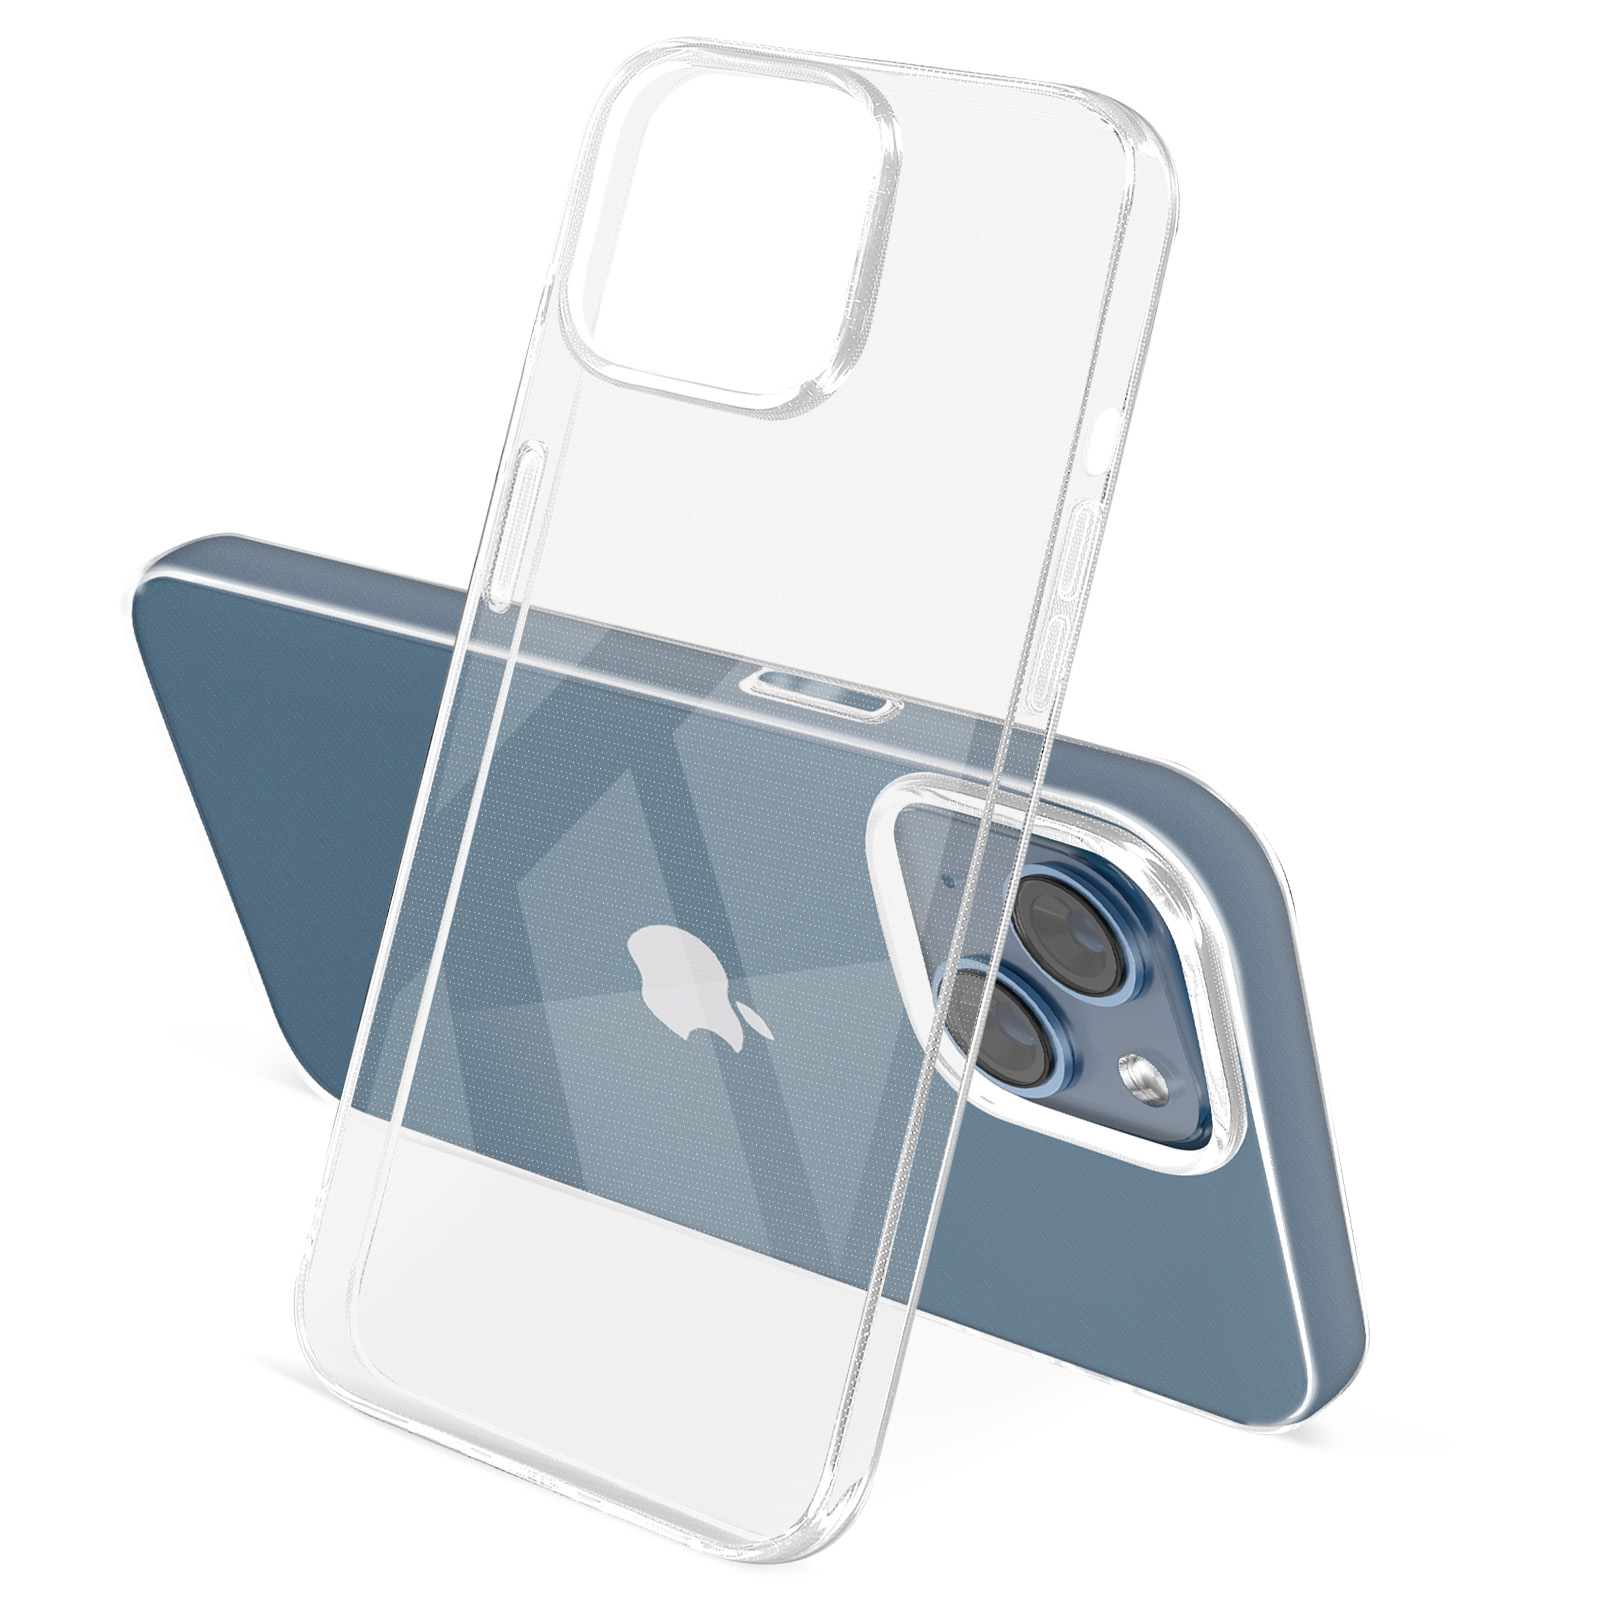 Coque silicone souple transparente pour iPhone 13 - 4,90 €